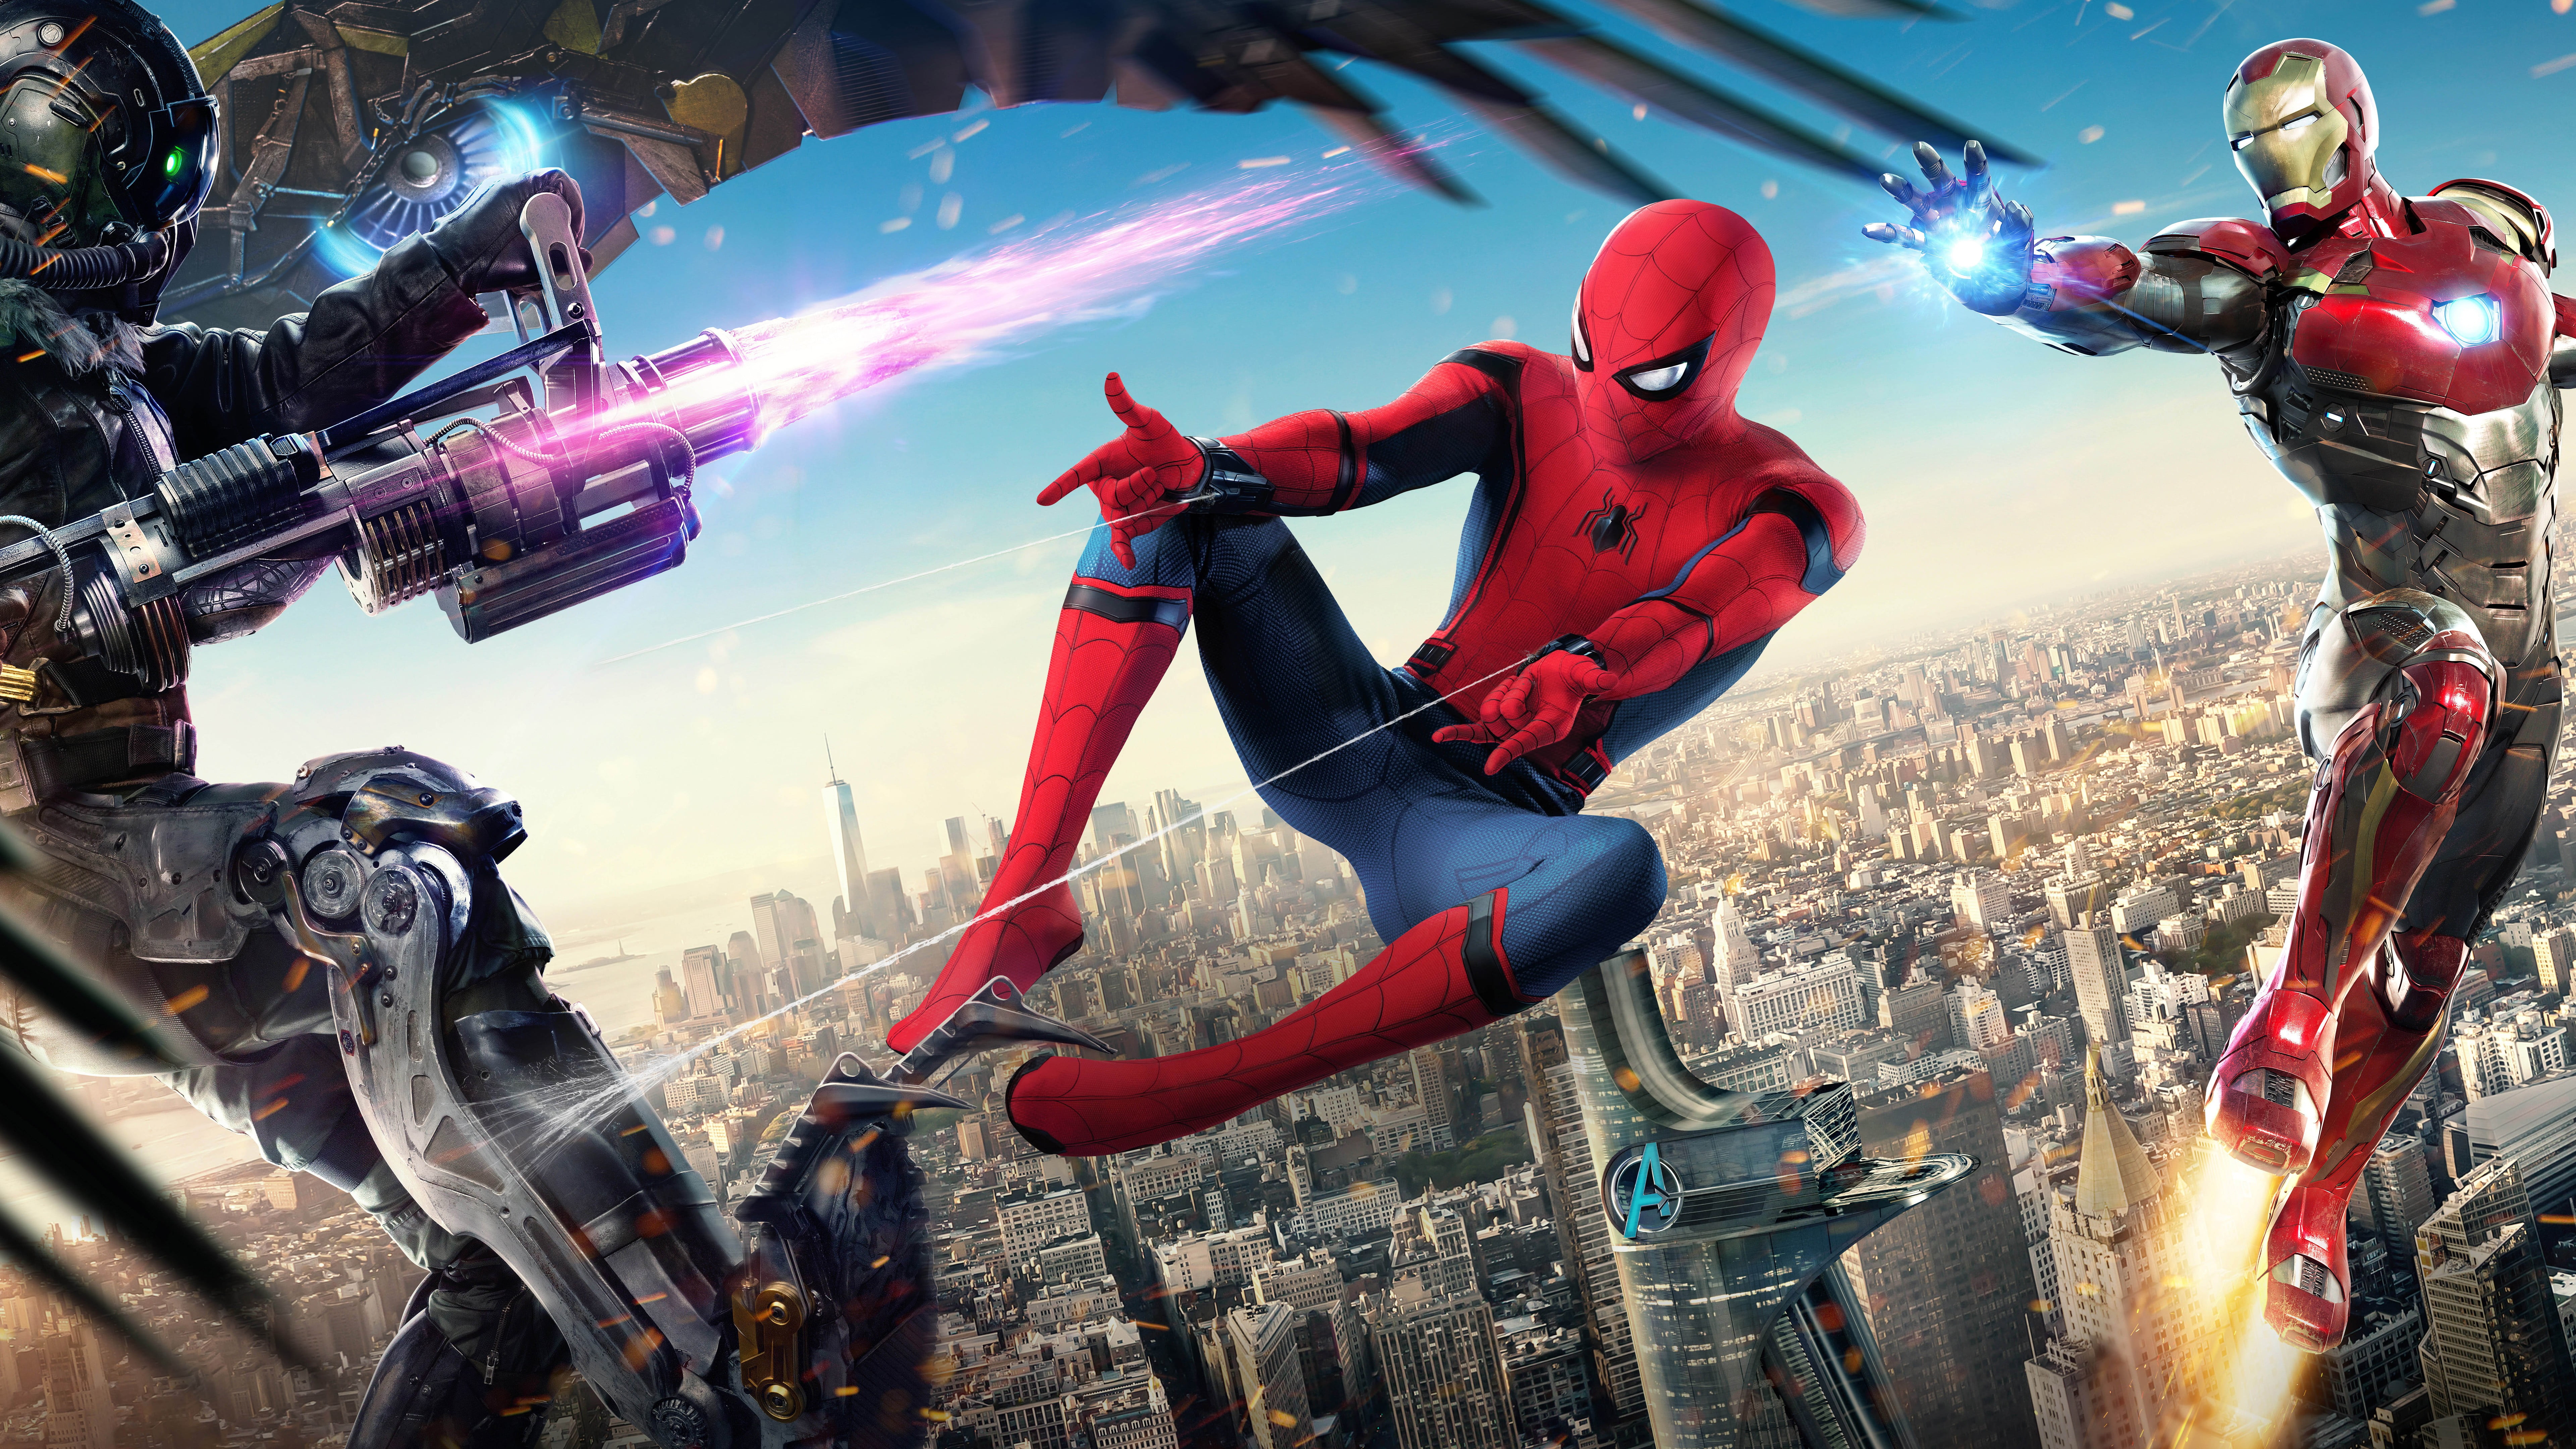 Spider-Man and Iron Man wallpaper, Spider-Man: Homecoming (2017), Iron Man, cityscape, Spider-Man